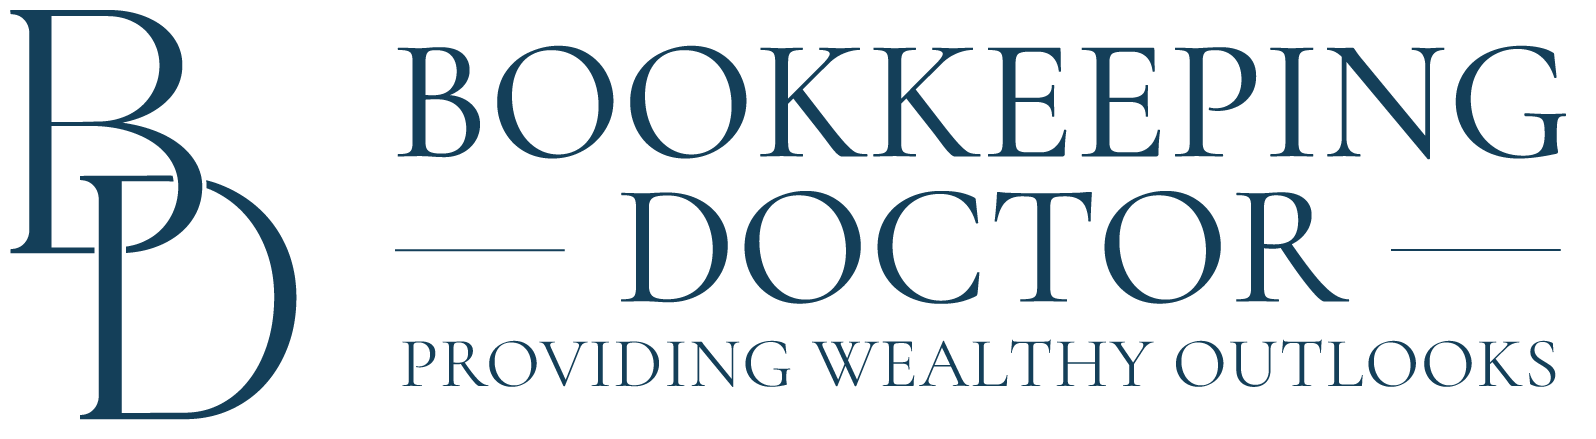 Bookkeeping Doctor Logo wide blue